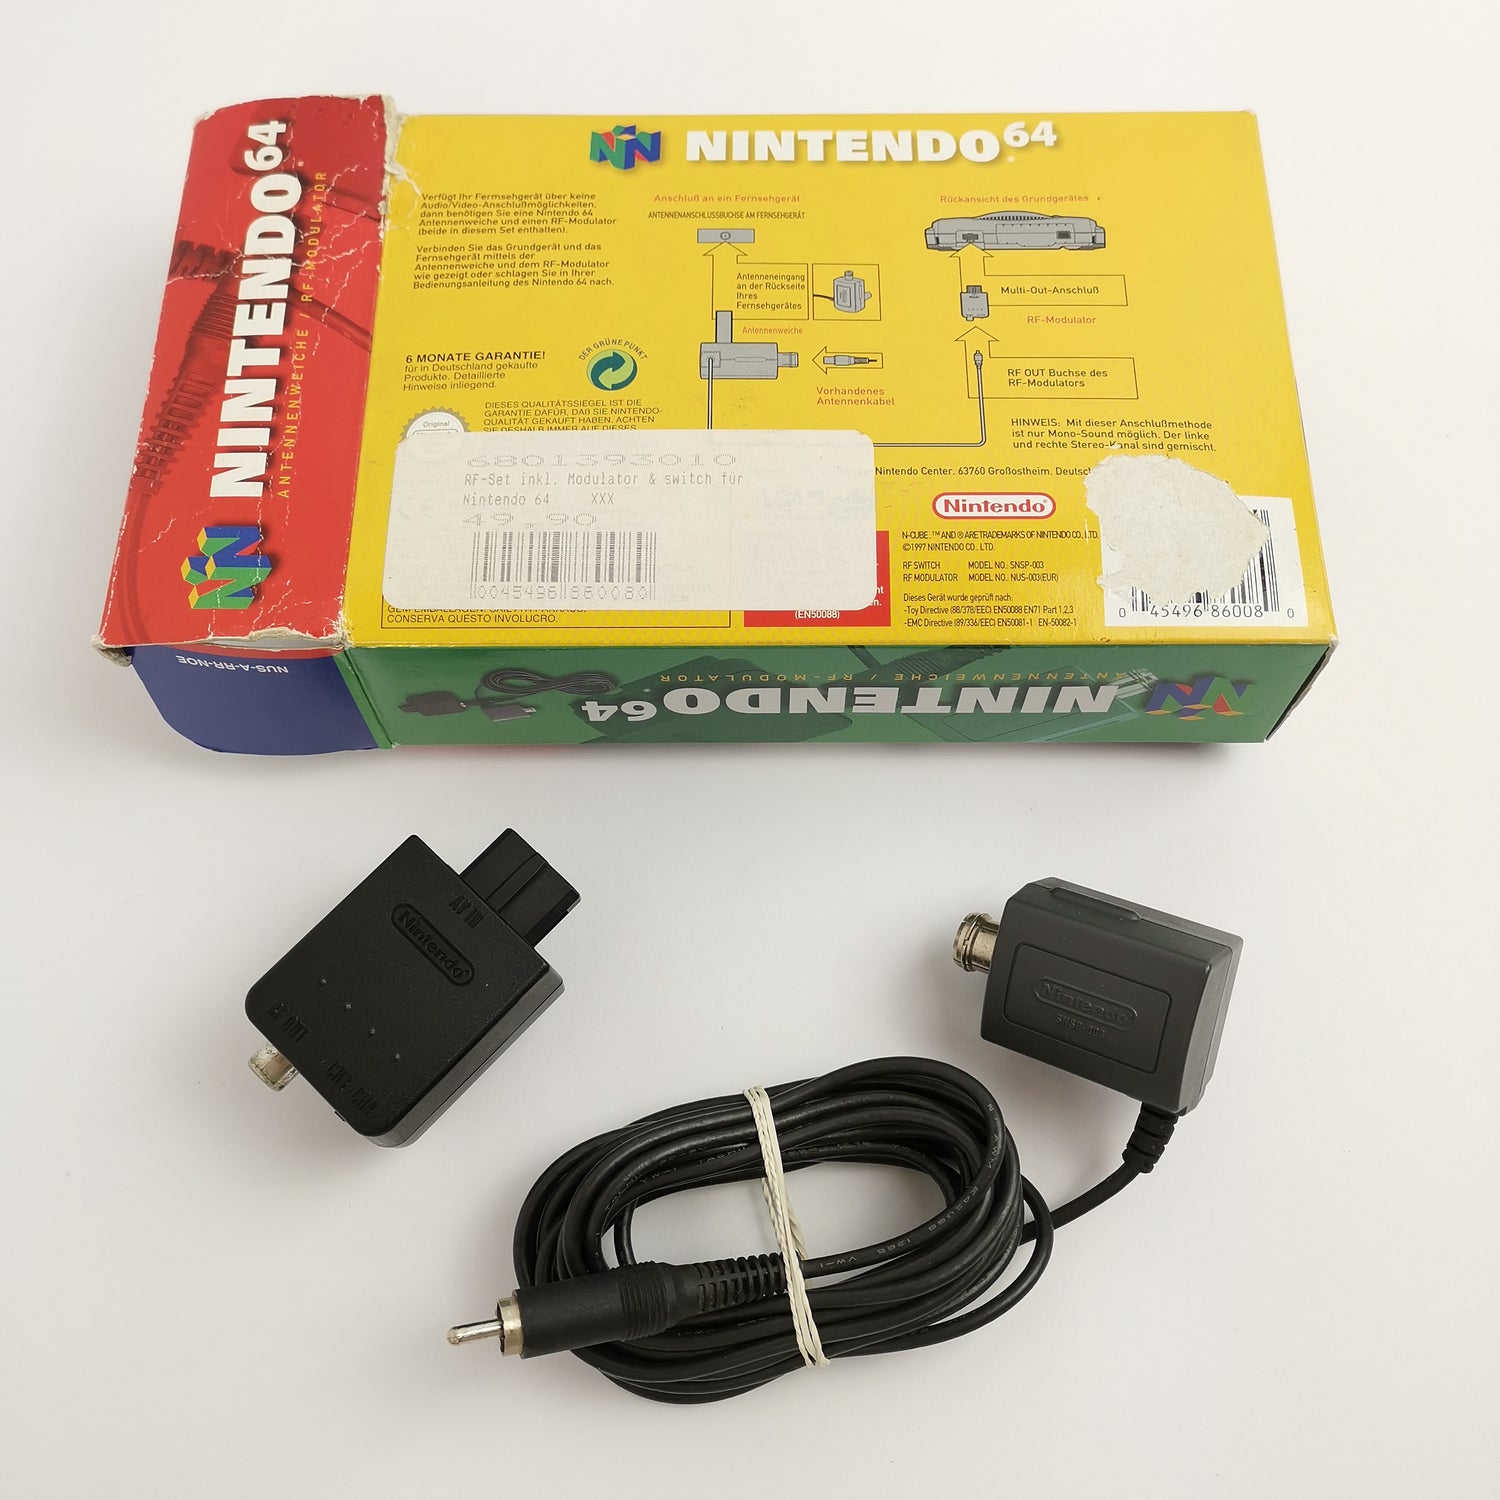 Nintendo 64 accessories: RF modulator / antenna splitter | N64 OVP - PAL